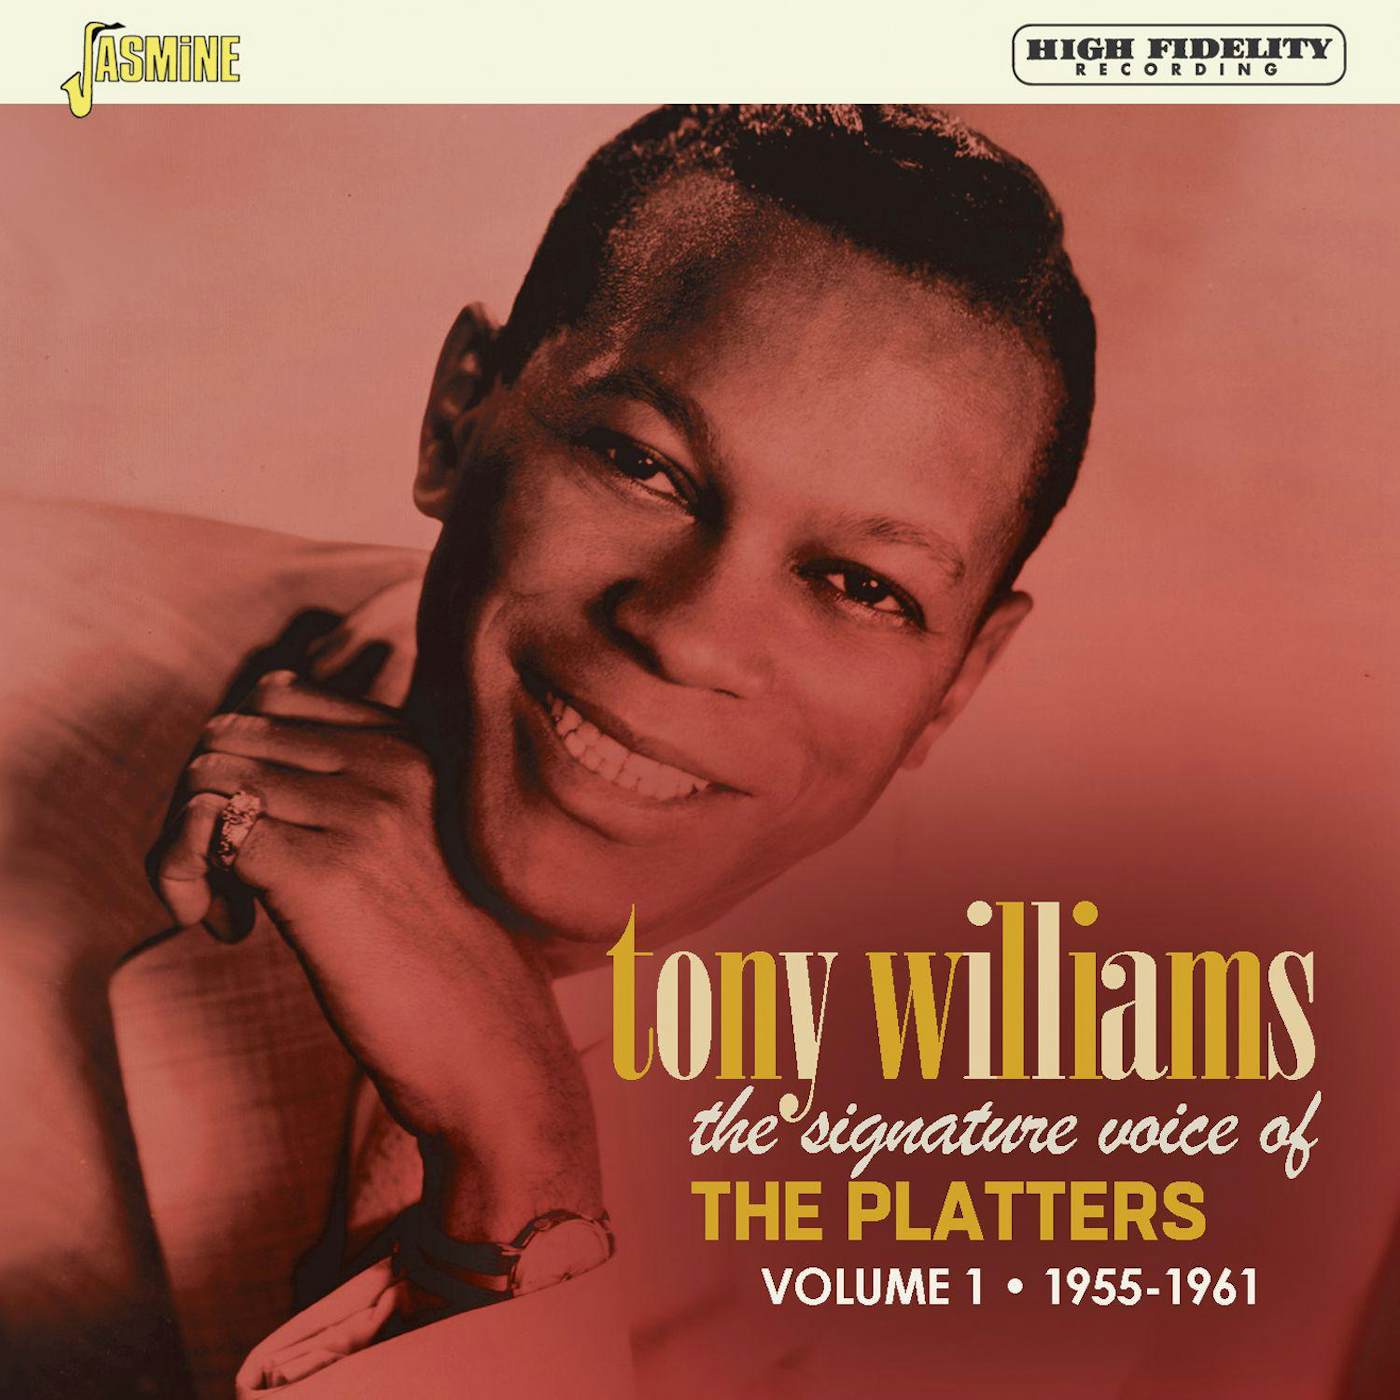 Tony Williams SIGNATURE VOICE OF THE PLATTERS 1955-1961 VOL 1 CD